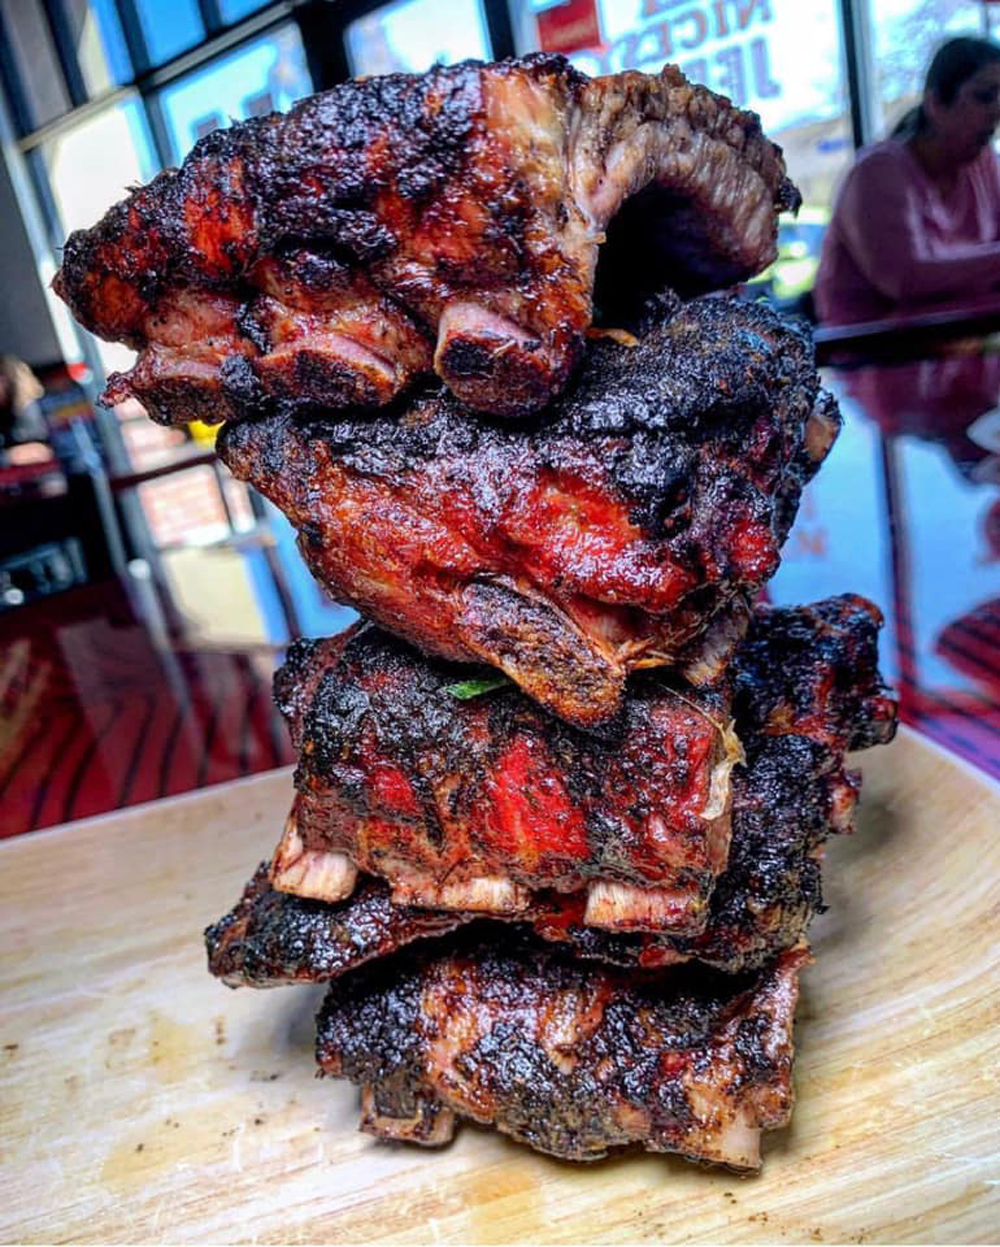 A full slab of jerk pork ribs, on the menu at the Caribbean-inspired Big Jerk.